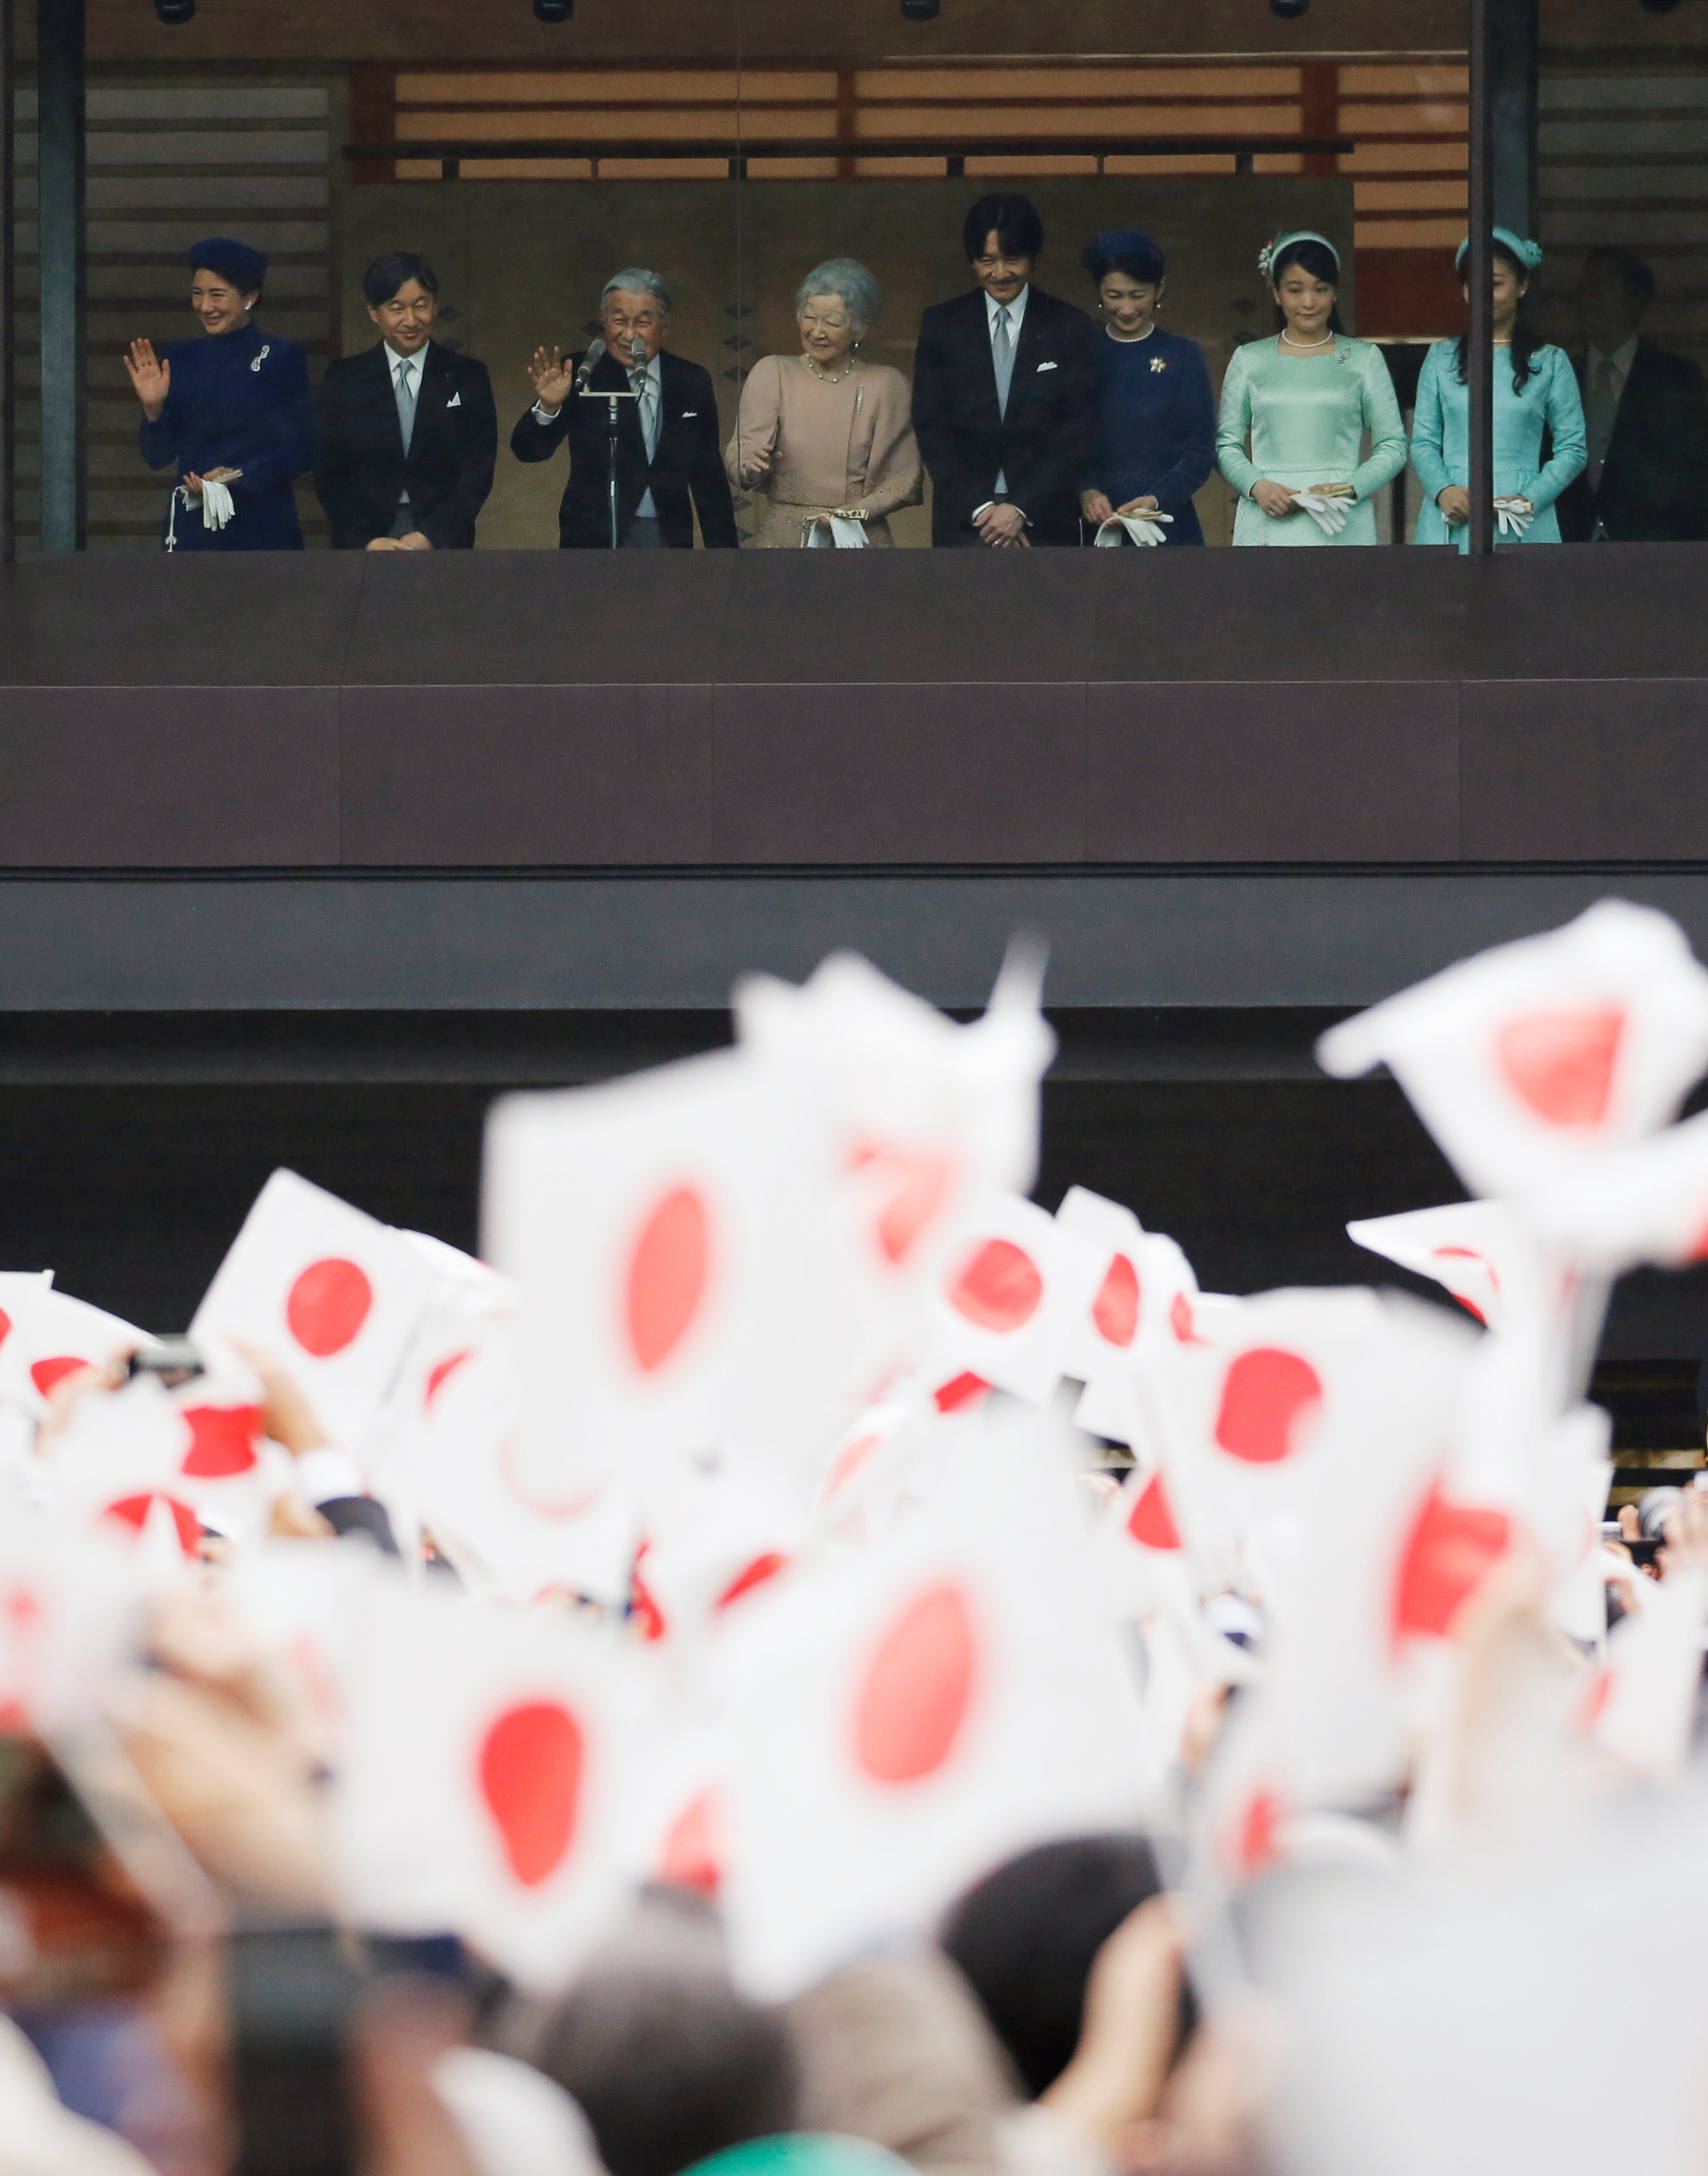 امبراطور اليابان بين زوجته وأبناء وأحفاده